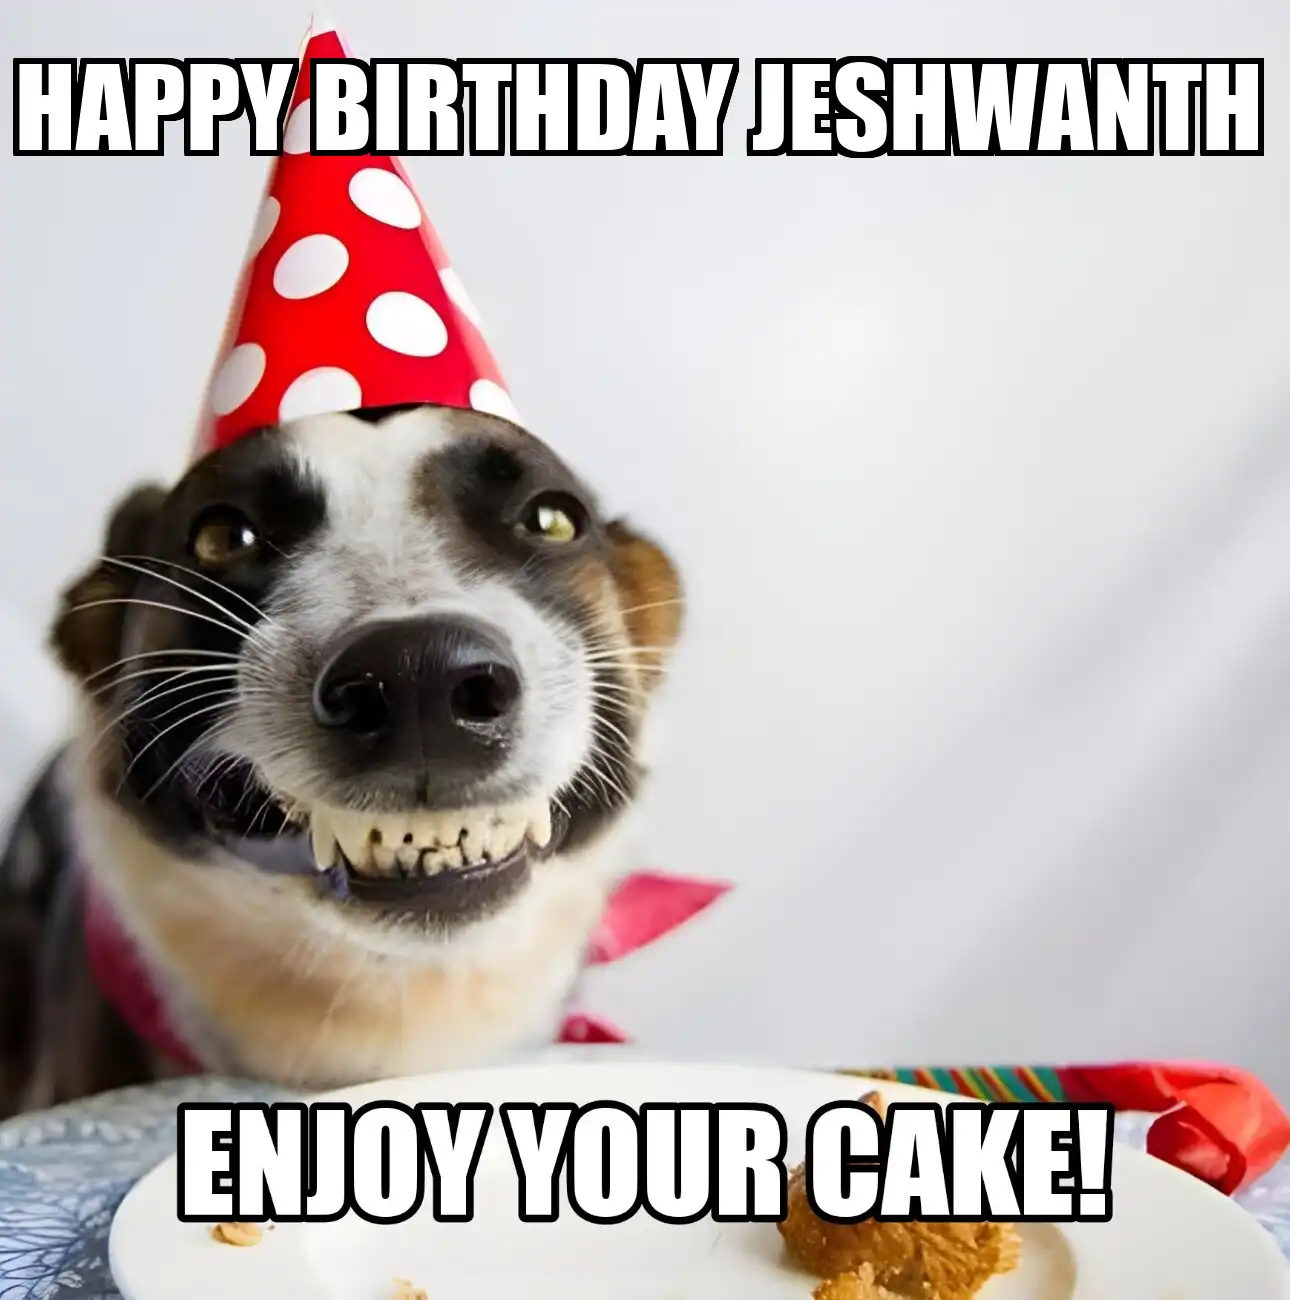 Happy Birthday Jeshwanth Enjoy Your Cake Dog Meme